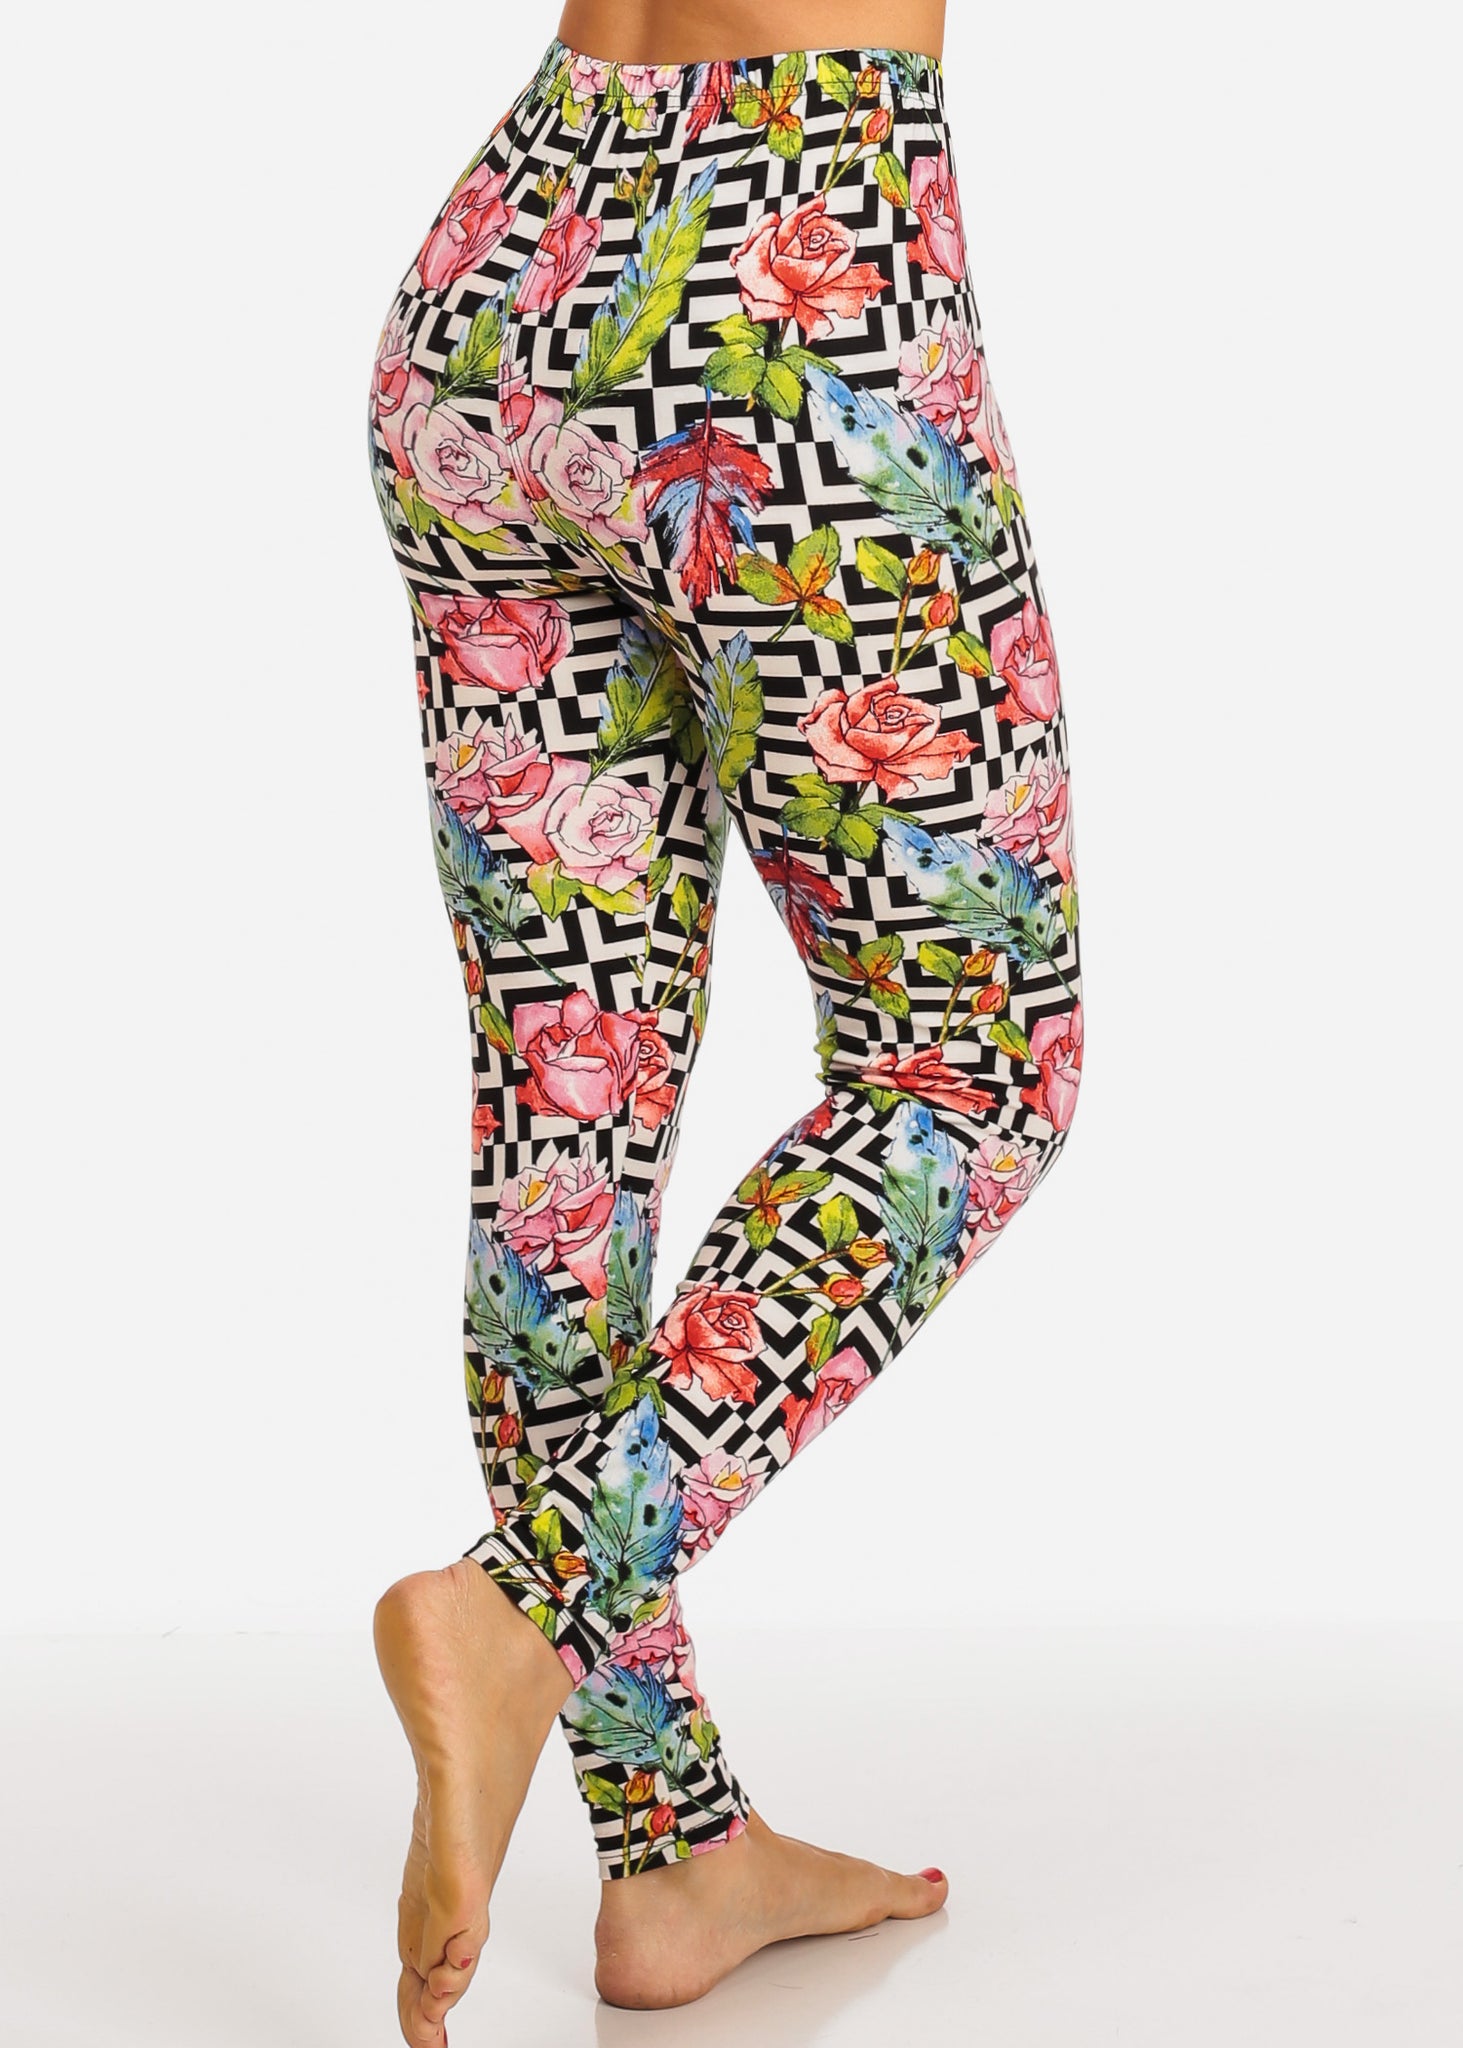 Blossom Pattern Multi Color Women's Leggings Skinny Leg Pants F-680 – One  Size Fits